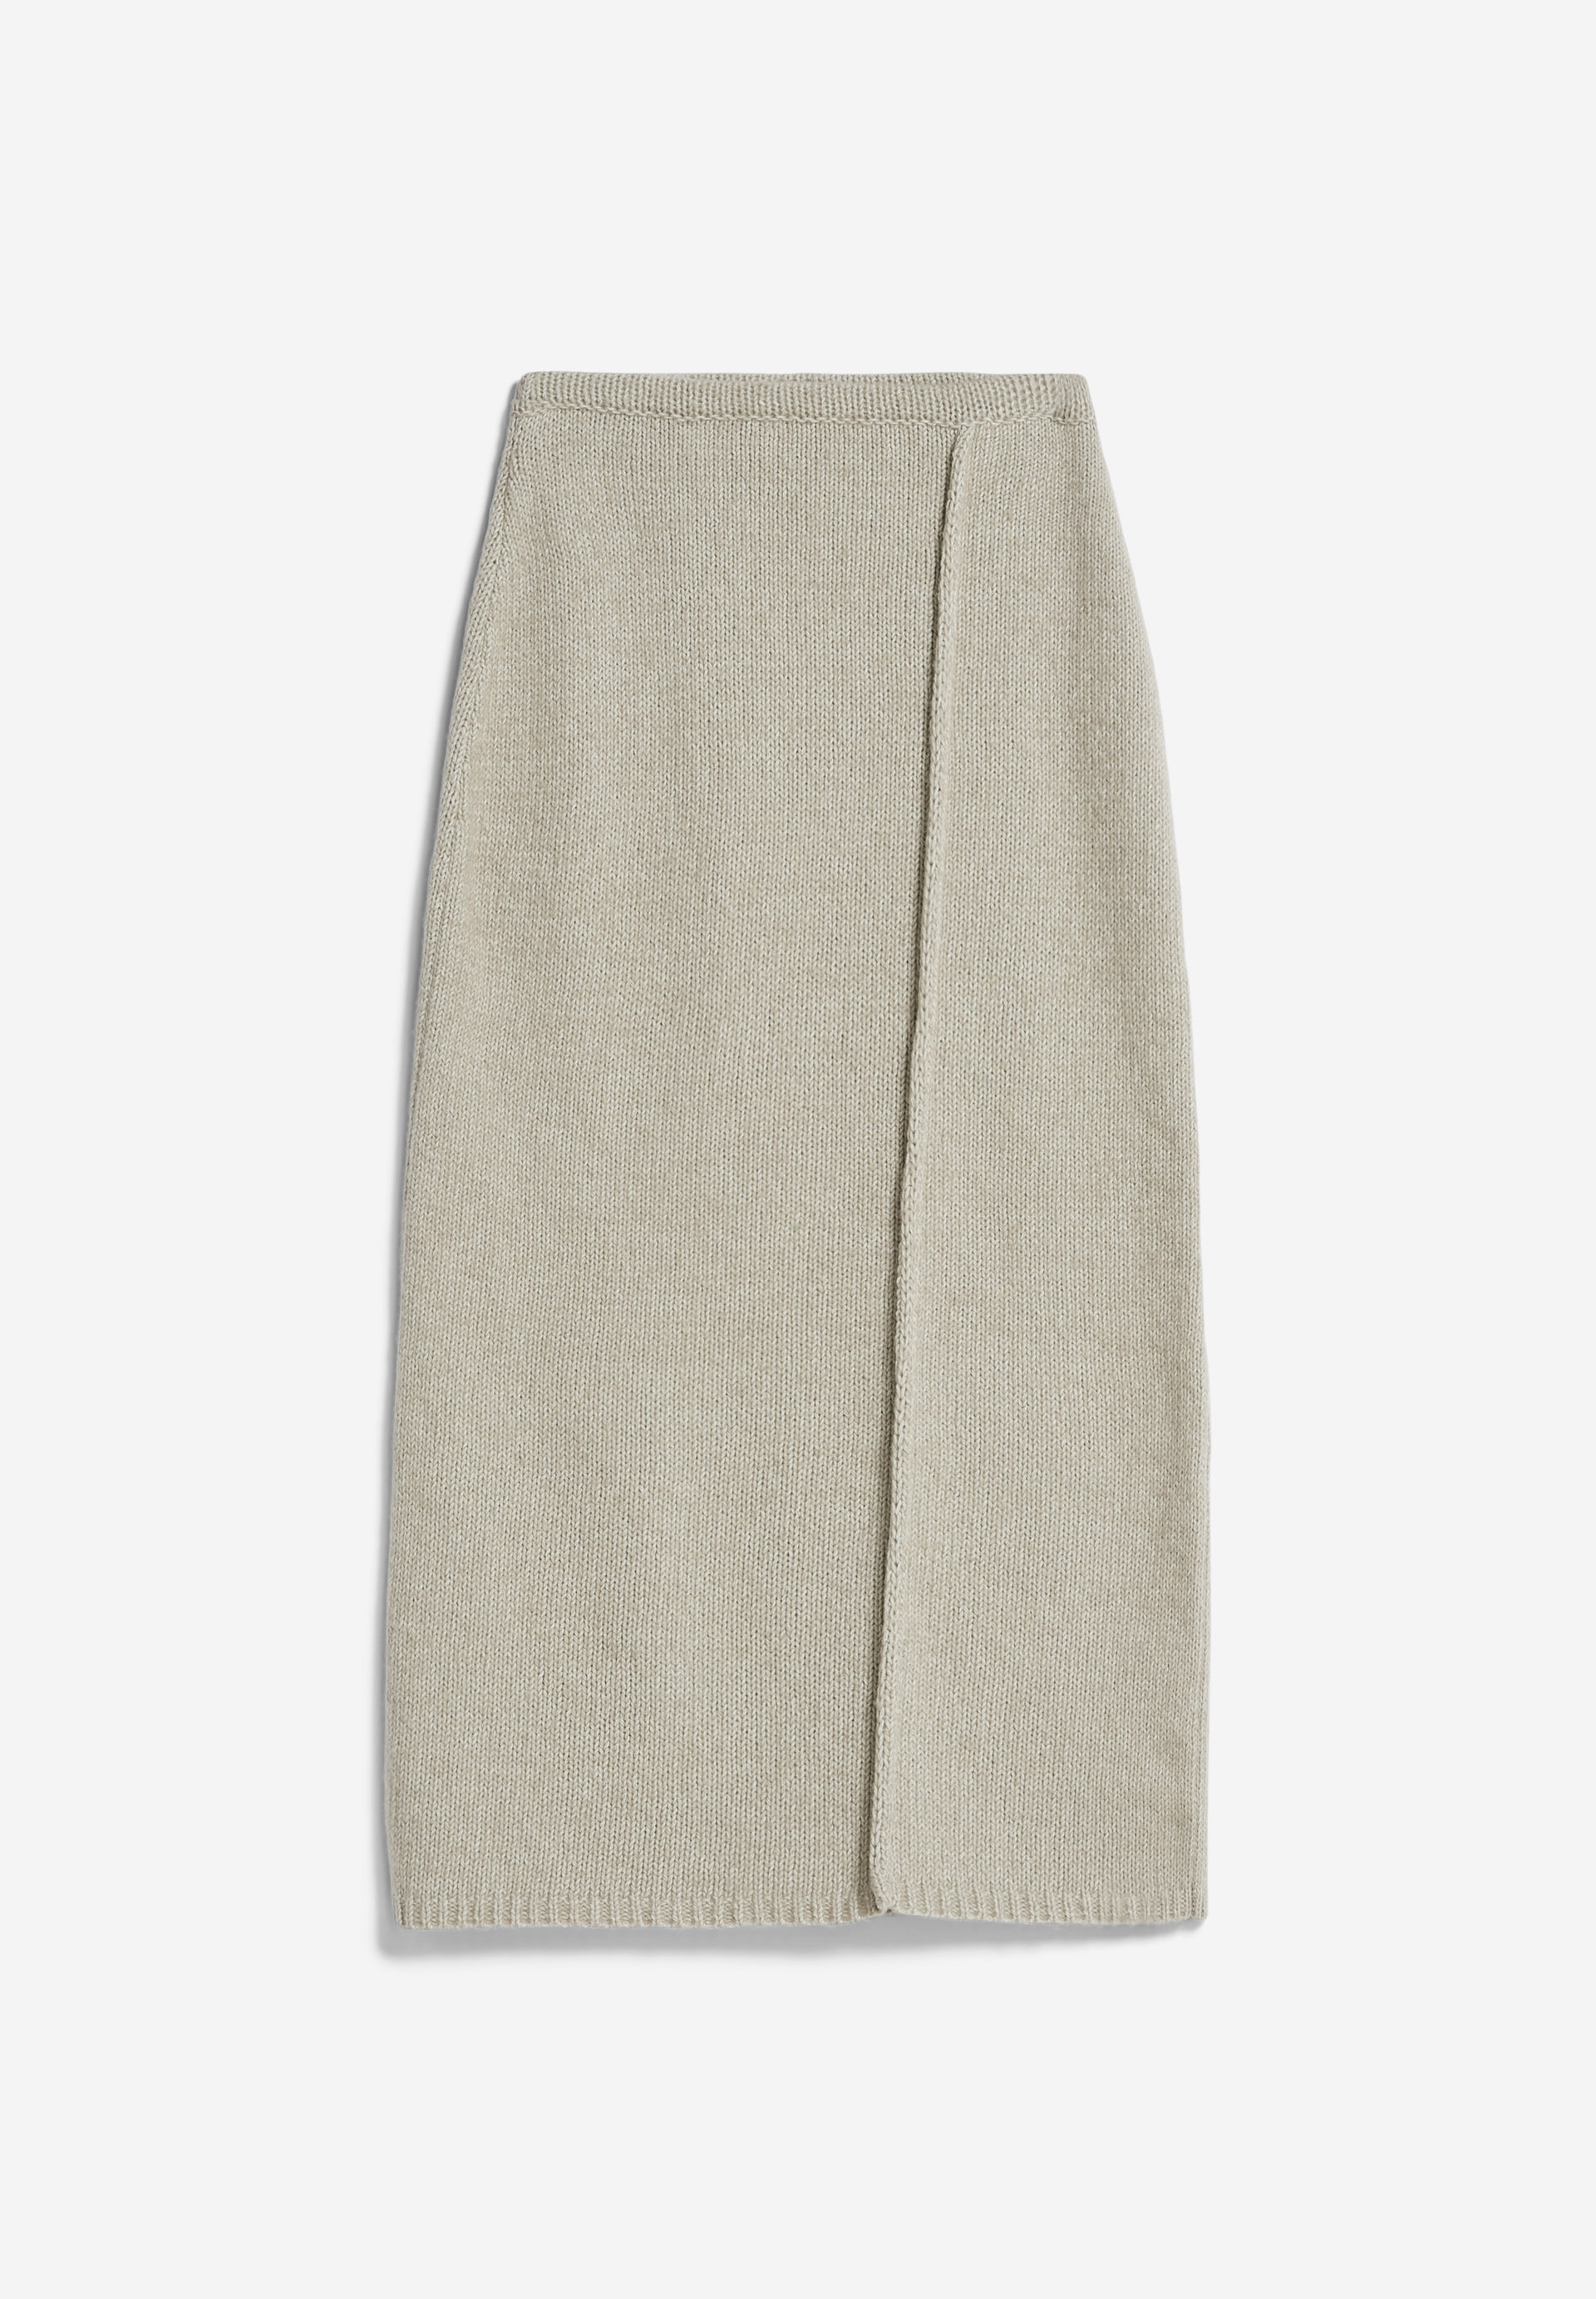 ENOLAA SOFT Knit Skirt Regular Fit made of Merino-Wool Mix